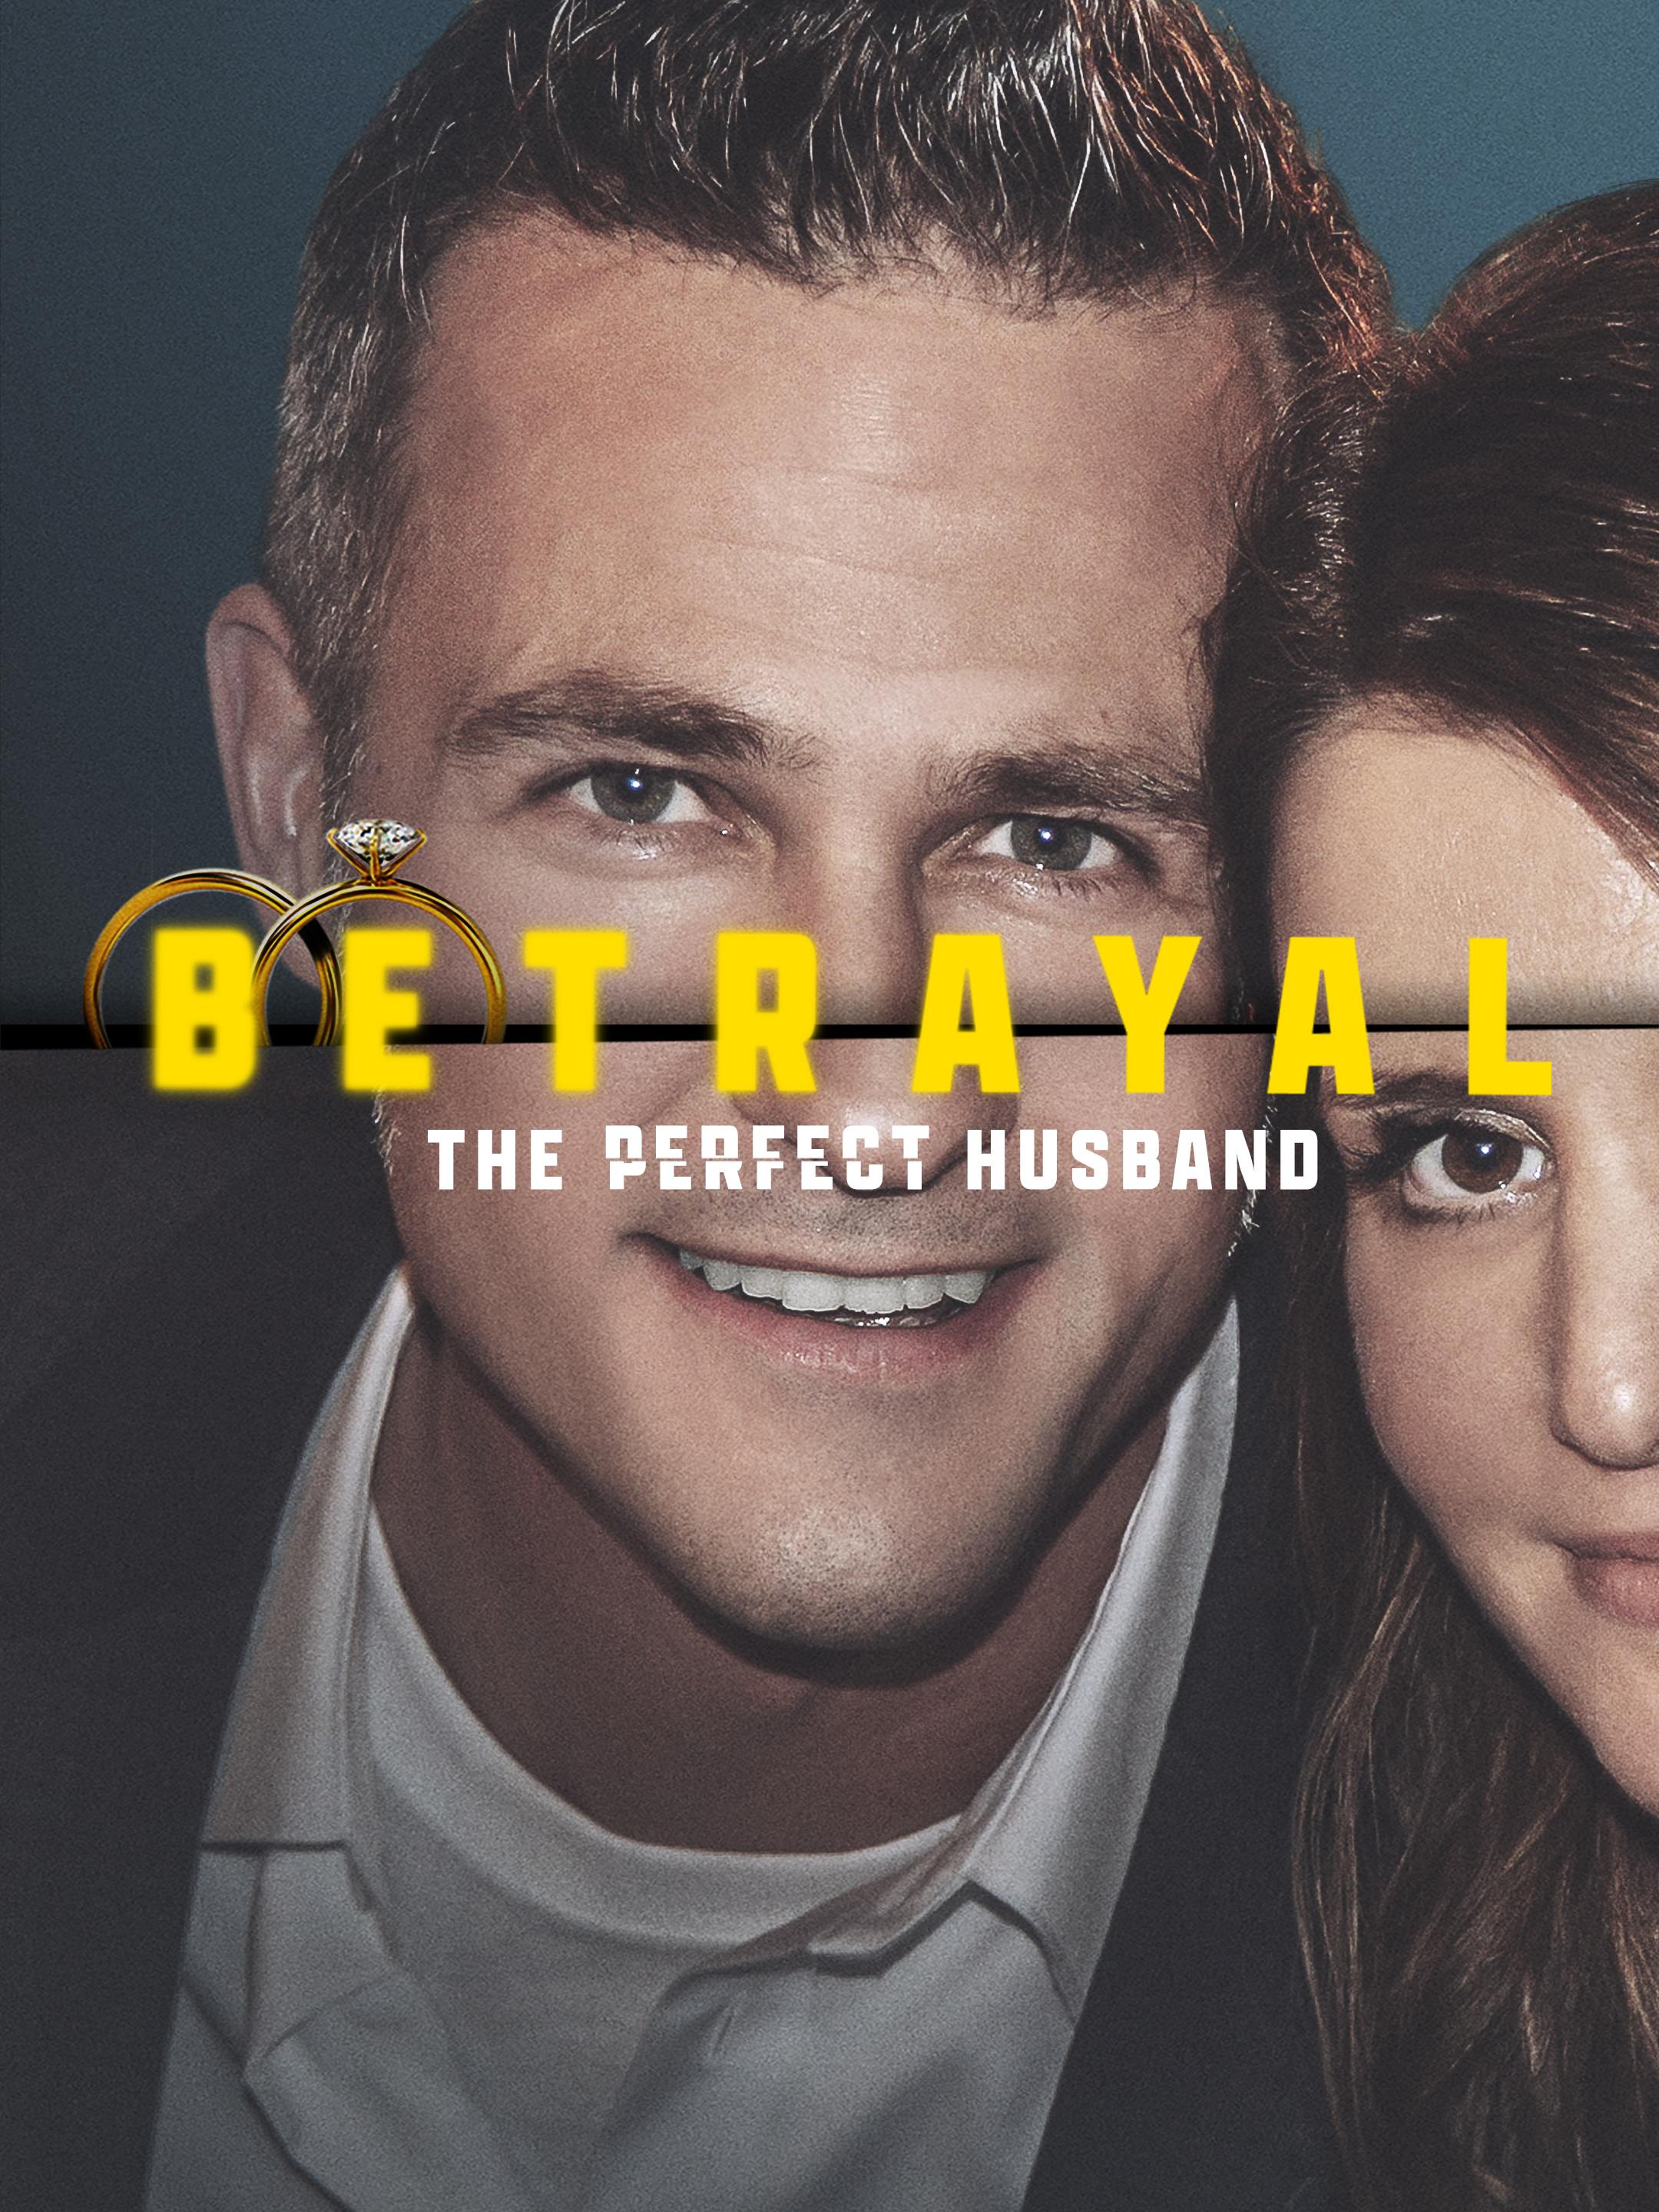 Betrayal The Perfect Husband